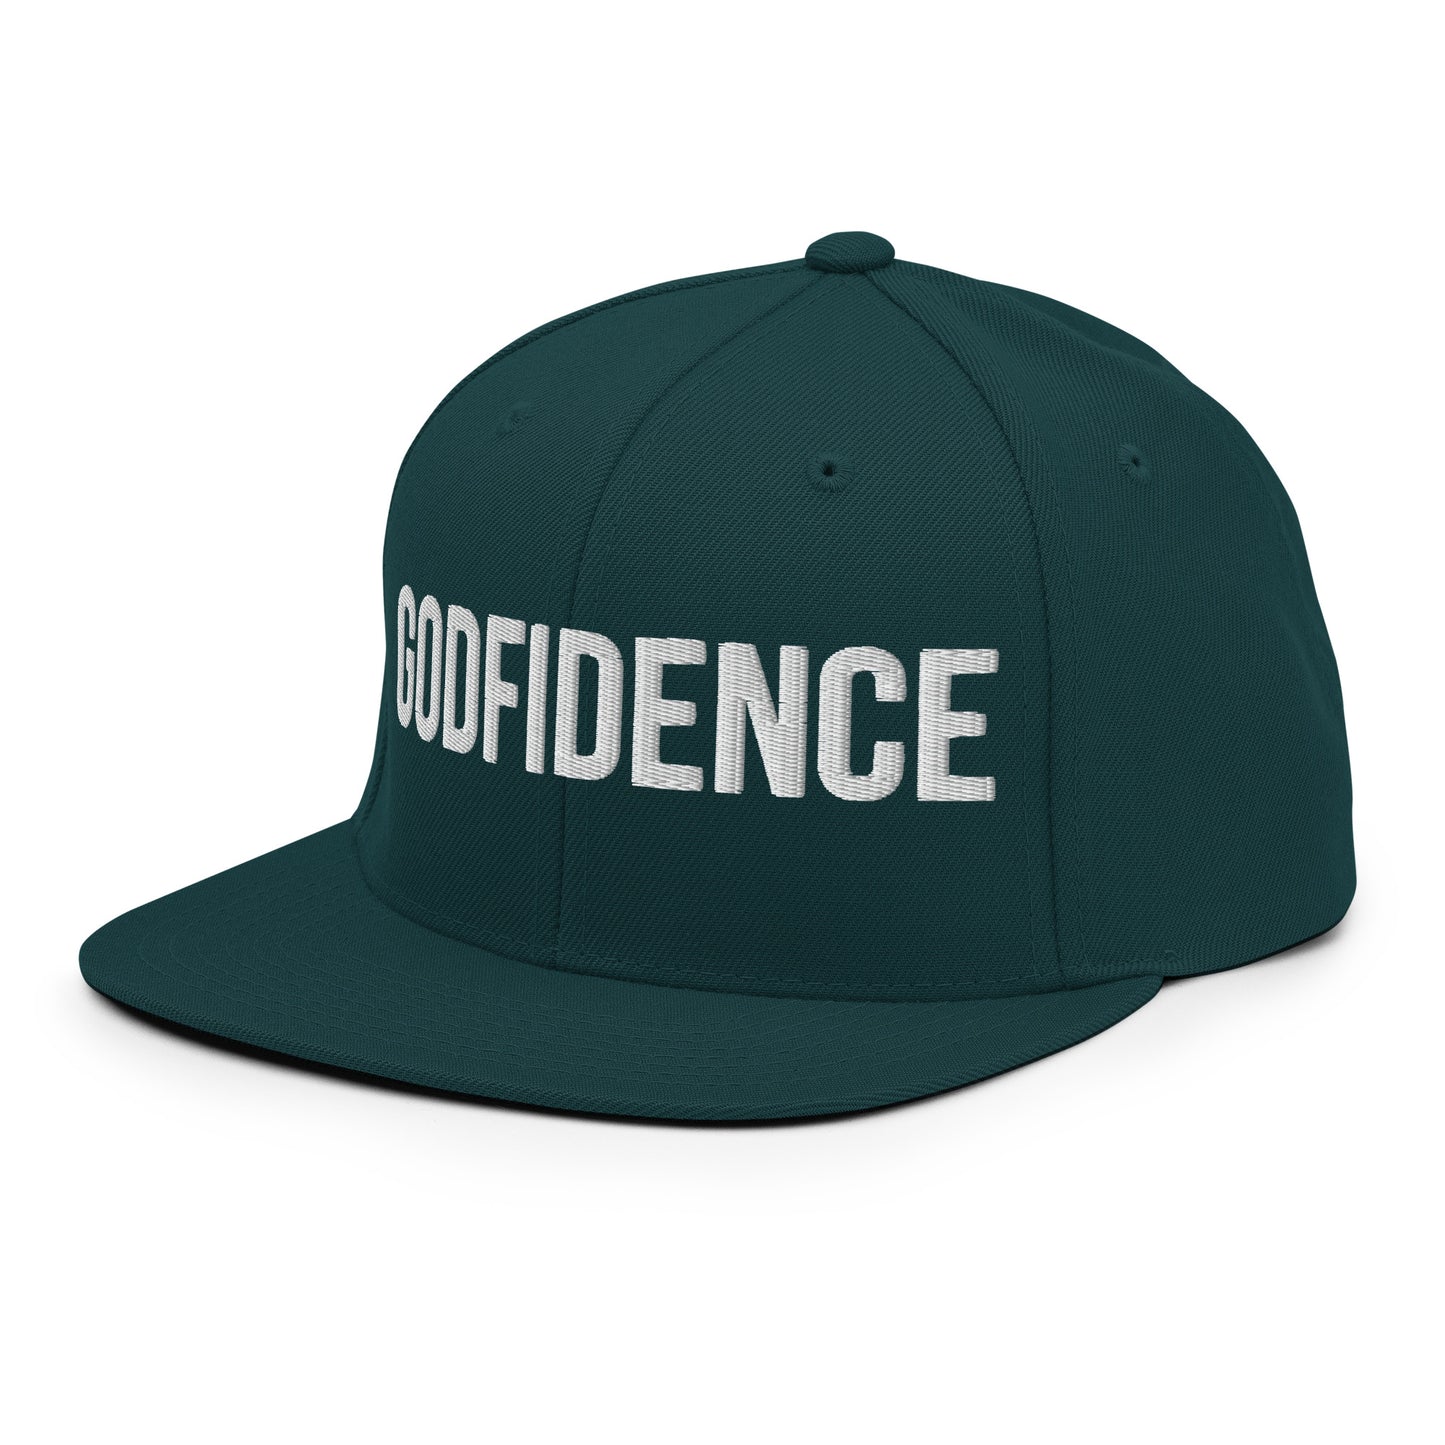 Gofidence Green Snapback Hat